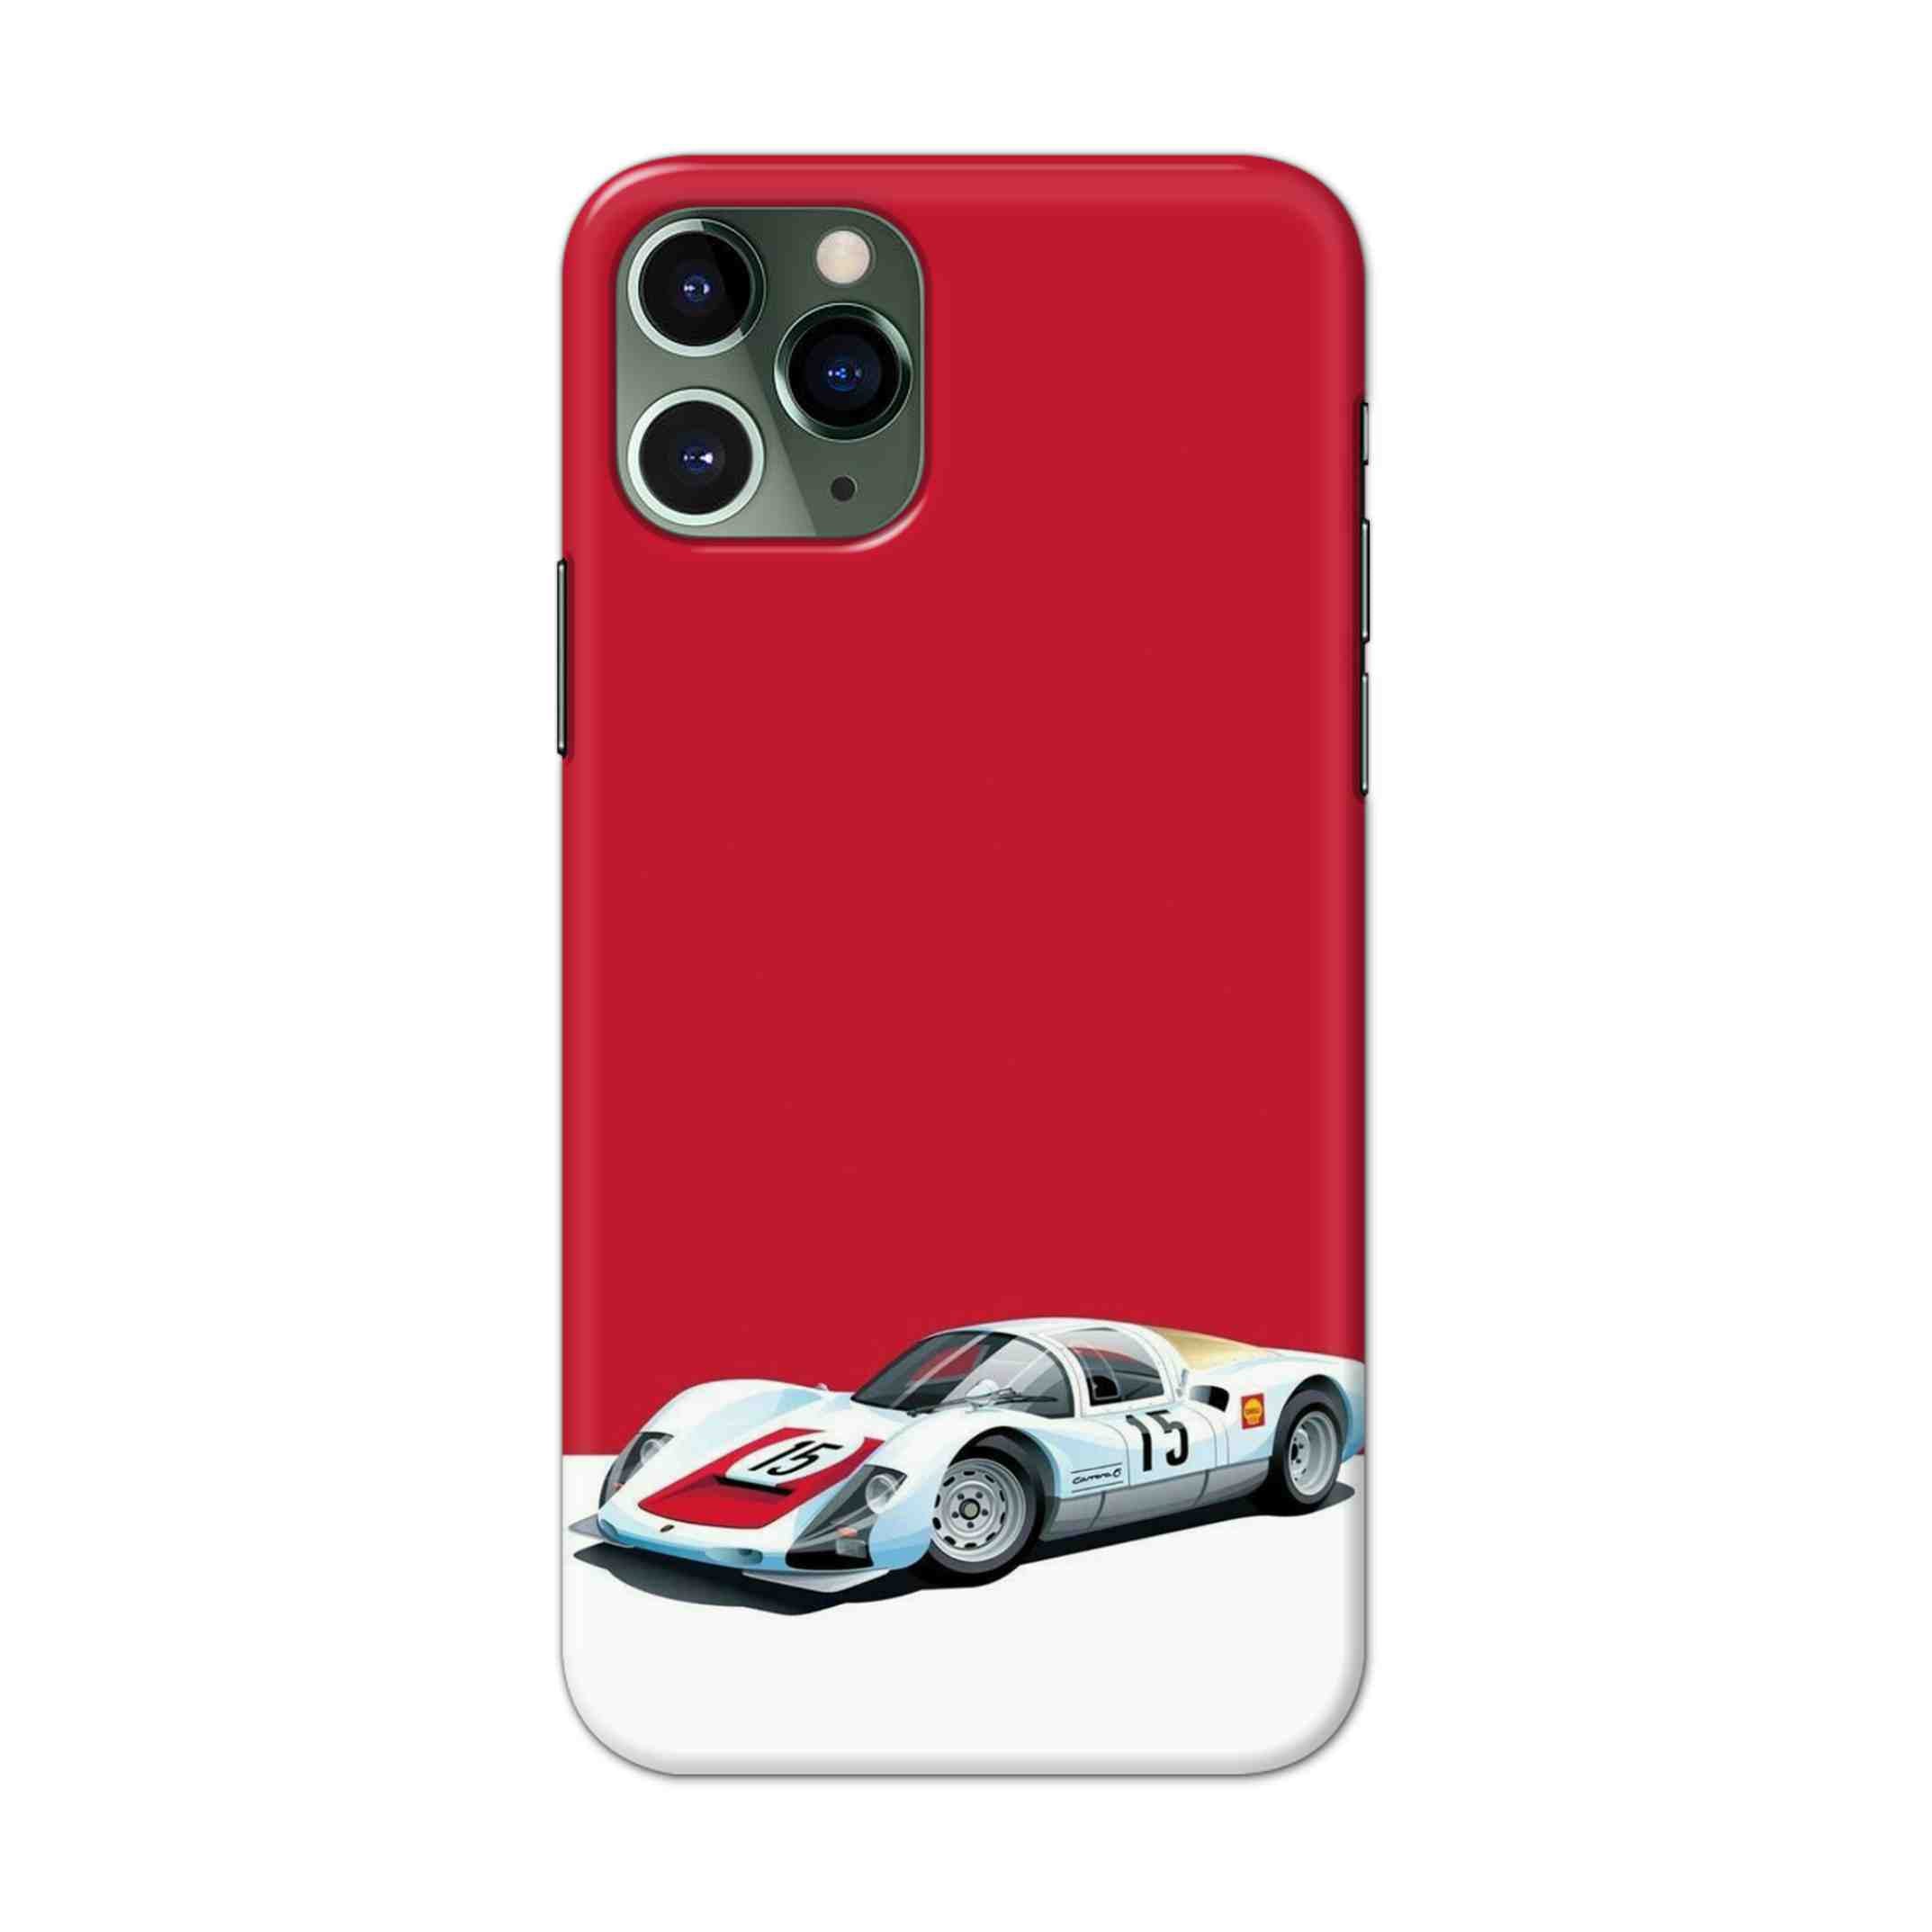 Buy Ferrari F15 Hard Back Mobile Phone Case/Cover For iPhone 11 Pro Online